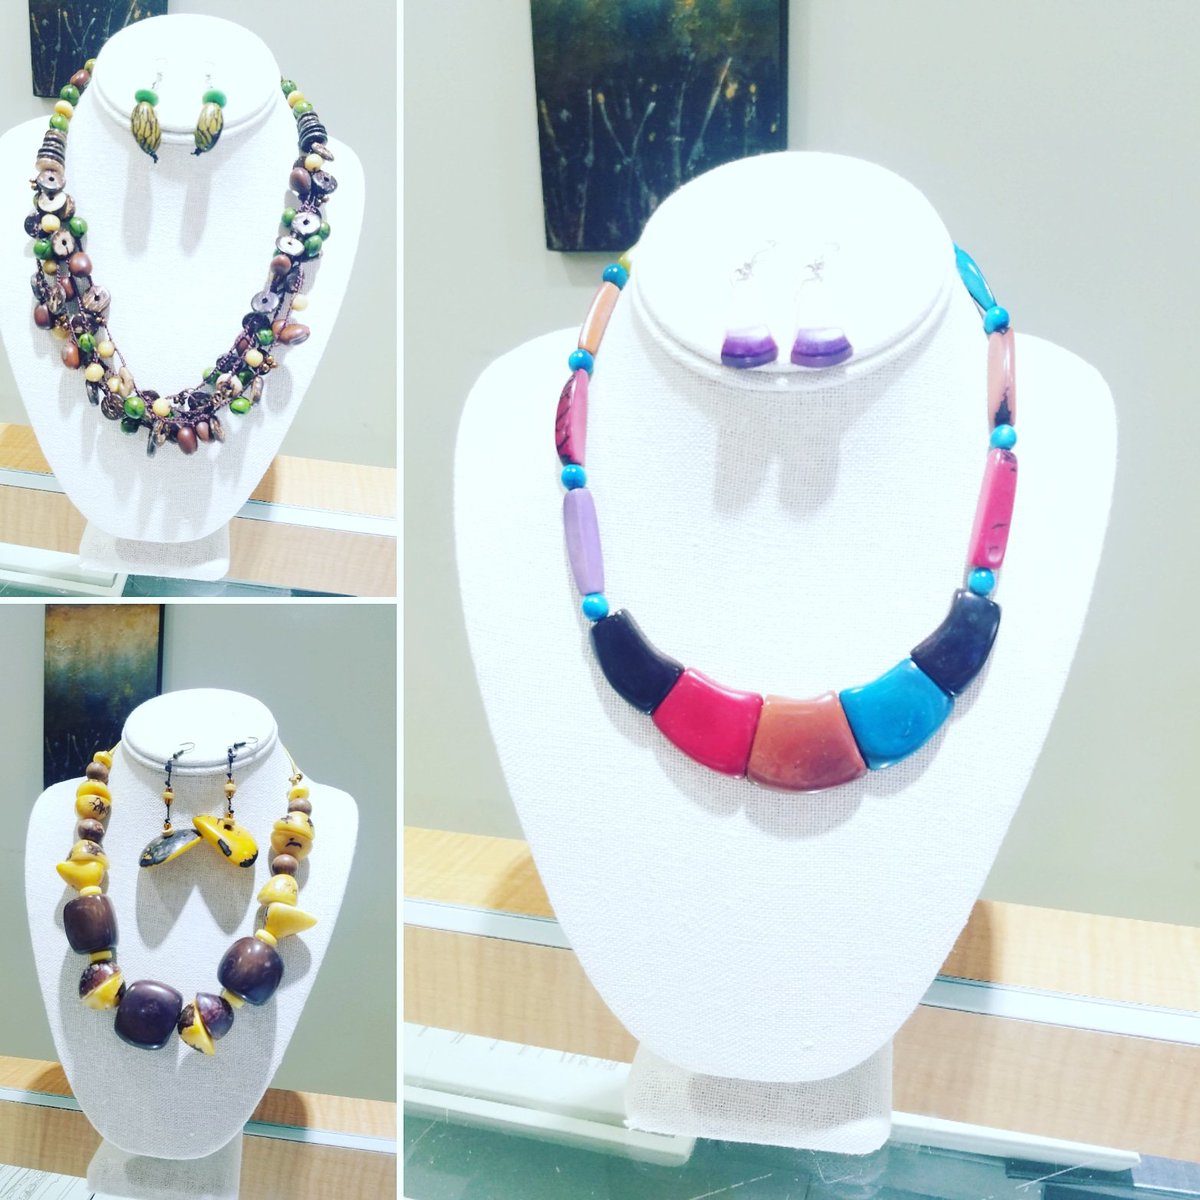 'Stylish tagua necklaces and earrings! 

#ecokaratjewelry #ecokarat #downtownoakpark #oakparkil #oakpark #marionst #marionstreet #tagua #taguajewelry #taguanecklaces #taguanecklace #taguaearrings #ecojeweler #ecolove #ecojewelrydesign #jewelrydesign